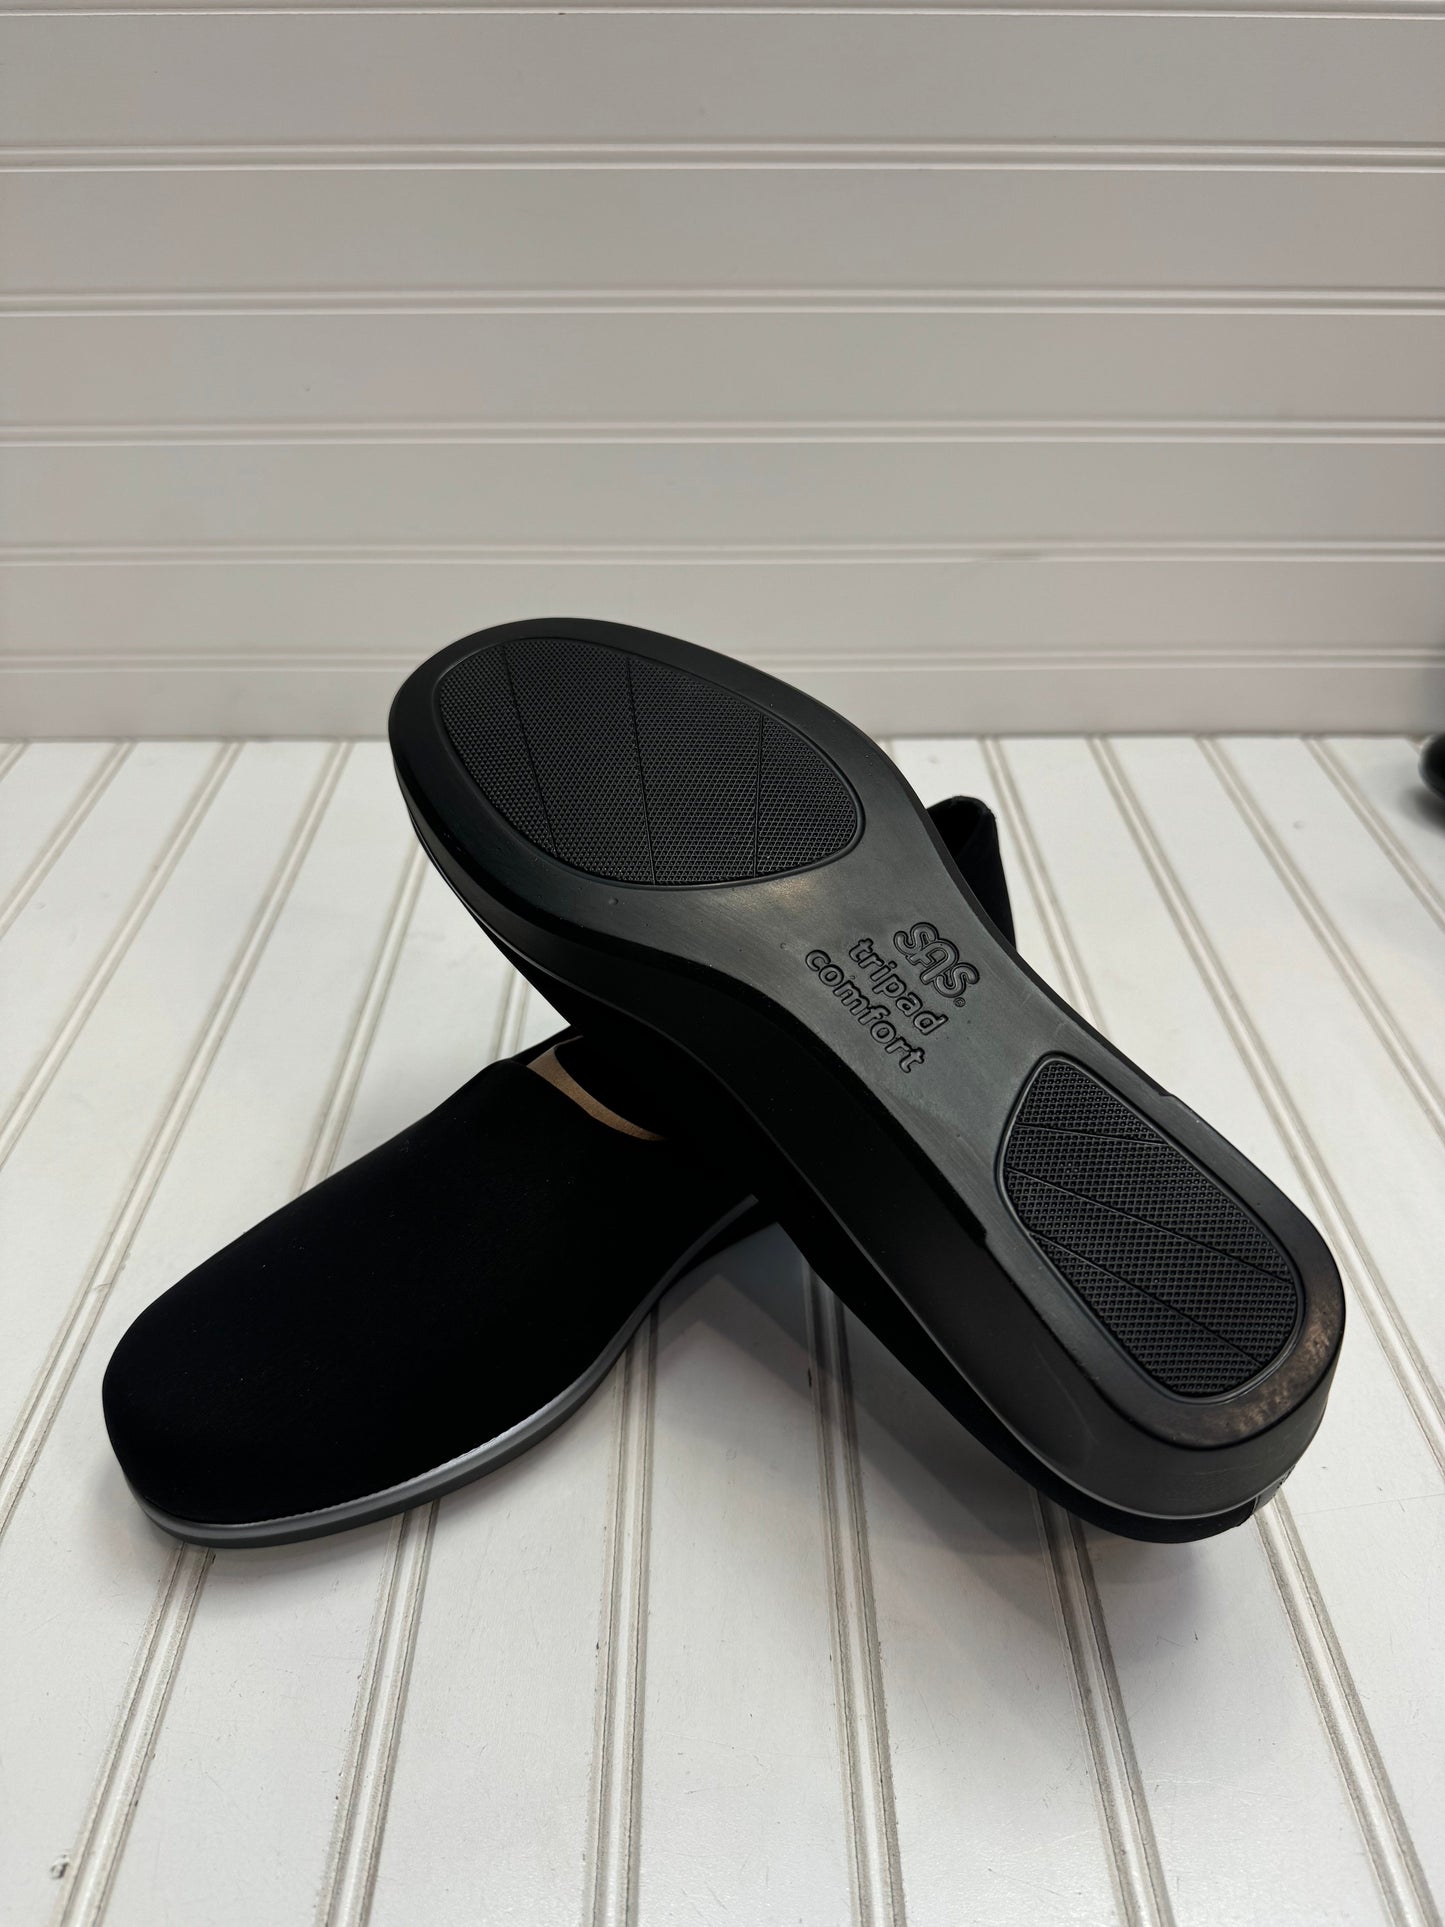 Black Shoes Heels Wedge Sas, Size 9.5